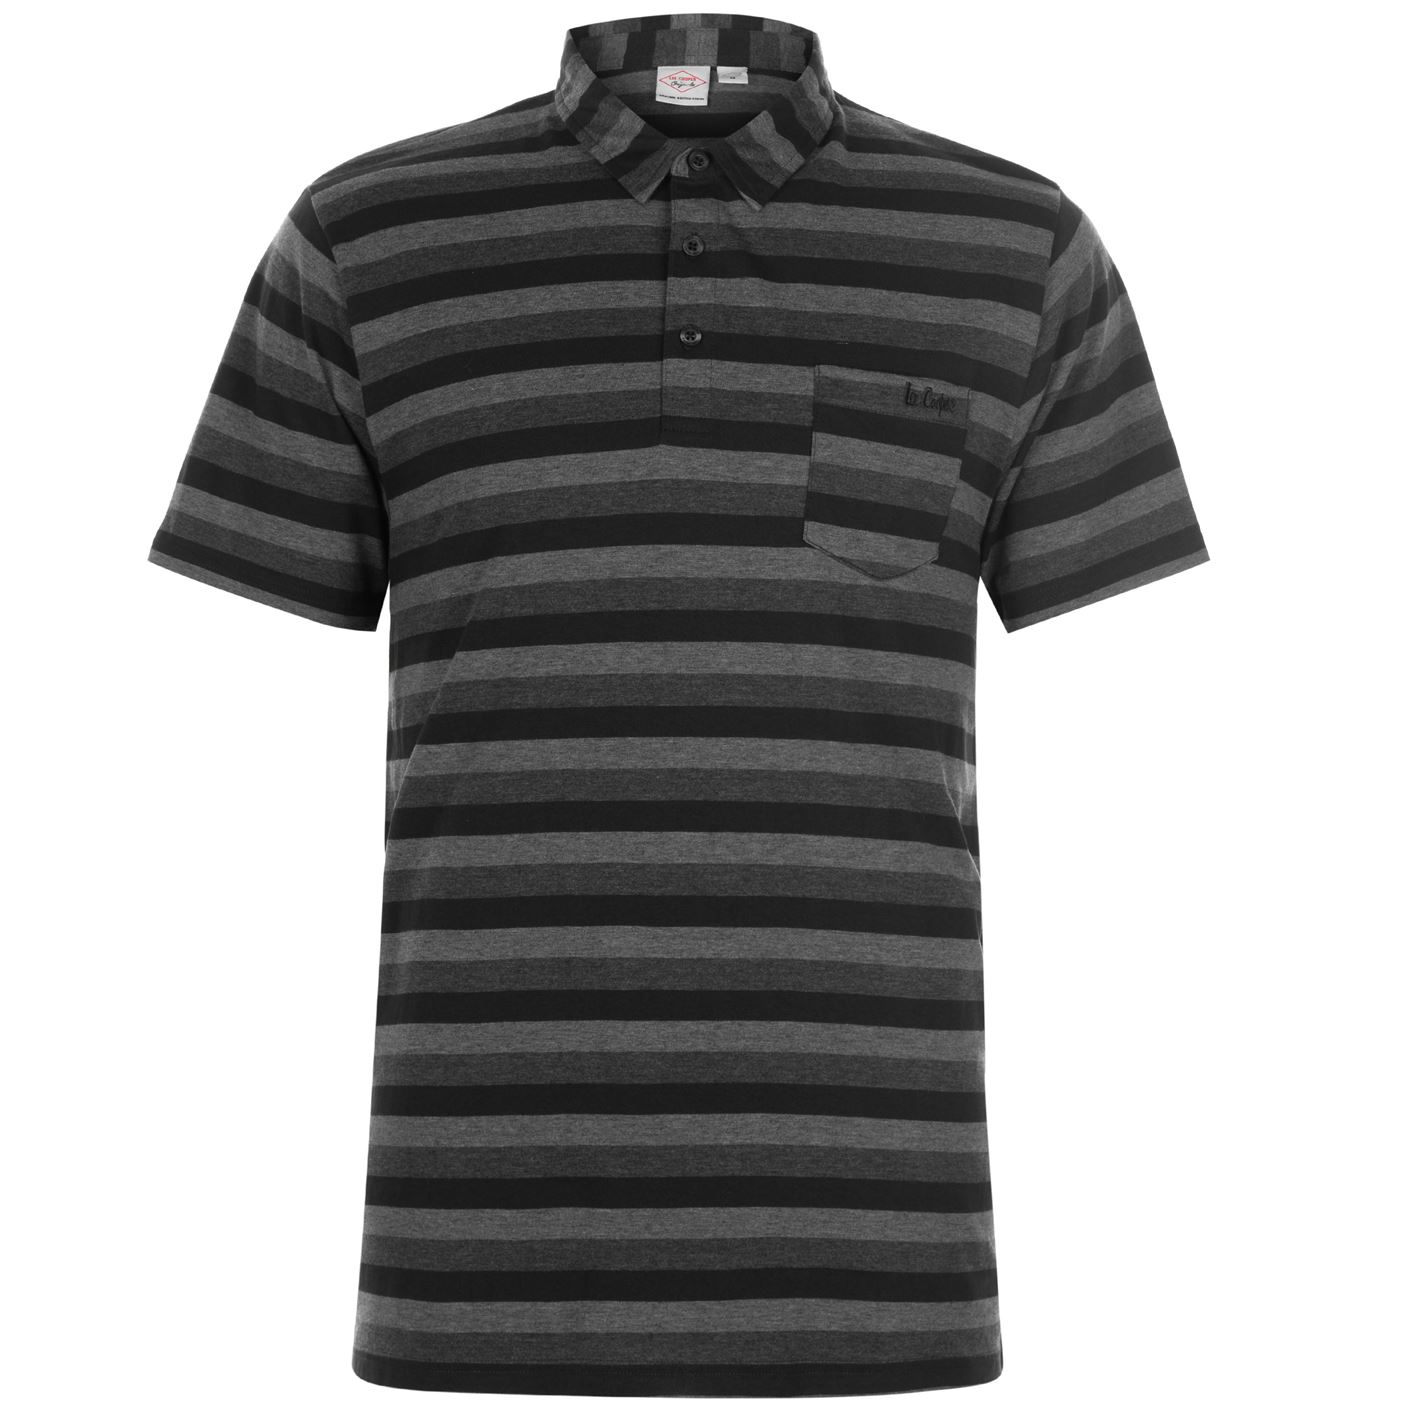 Tricouri polo cu dungi Lee Cooper Tonal Shirt pentru Barbati negru marl